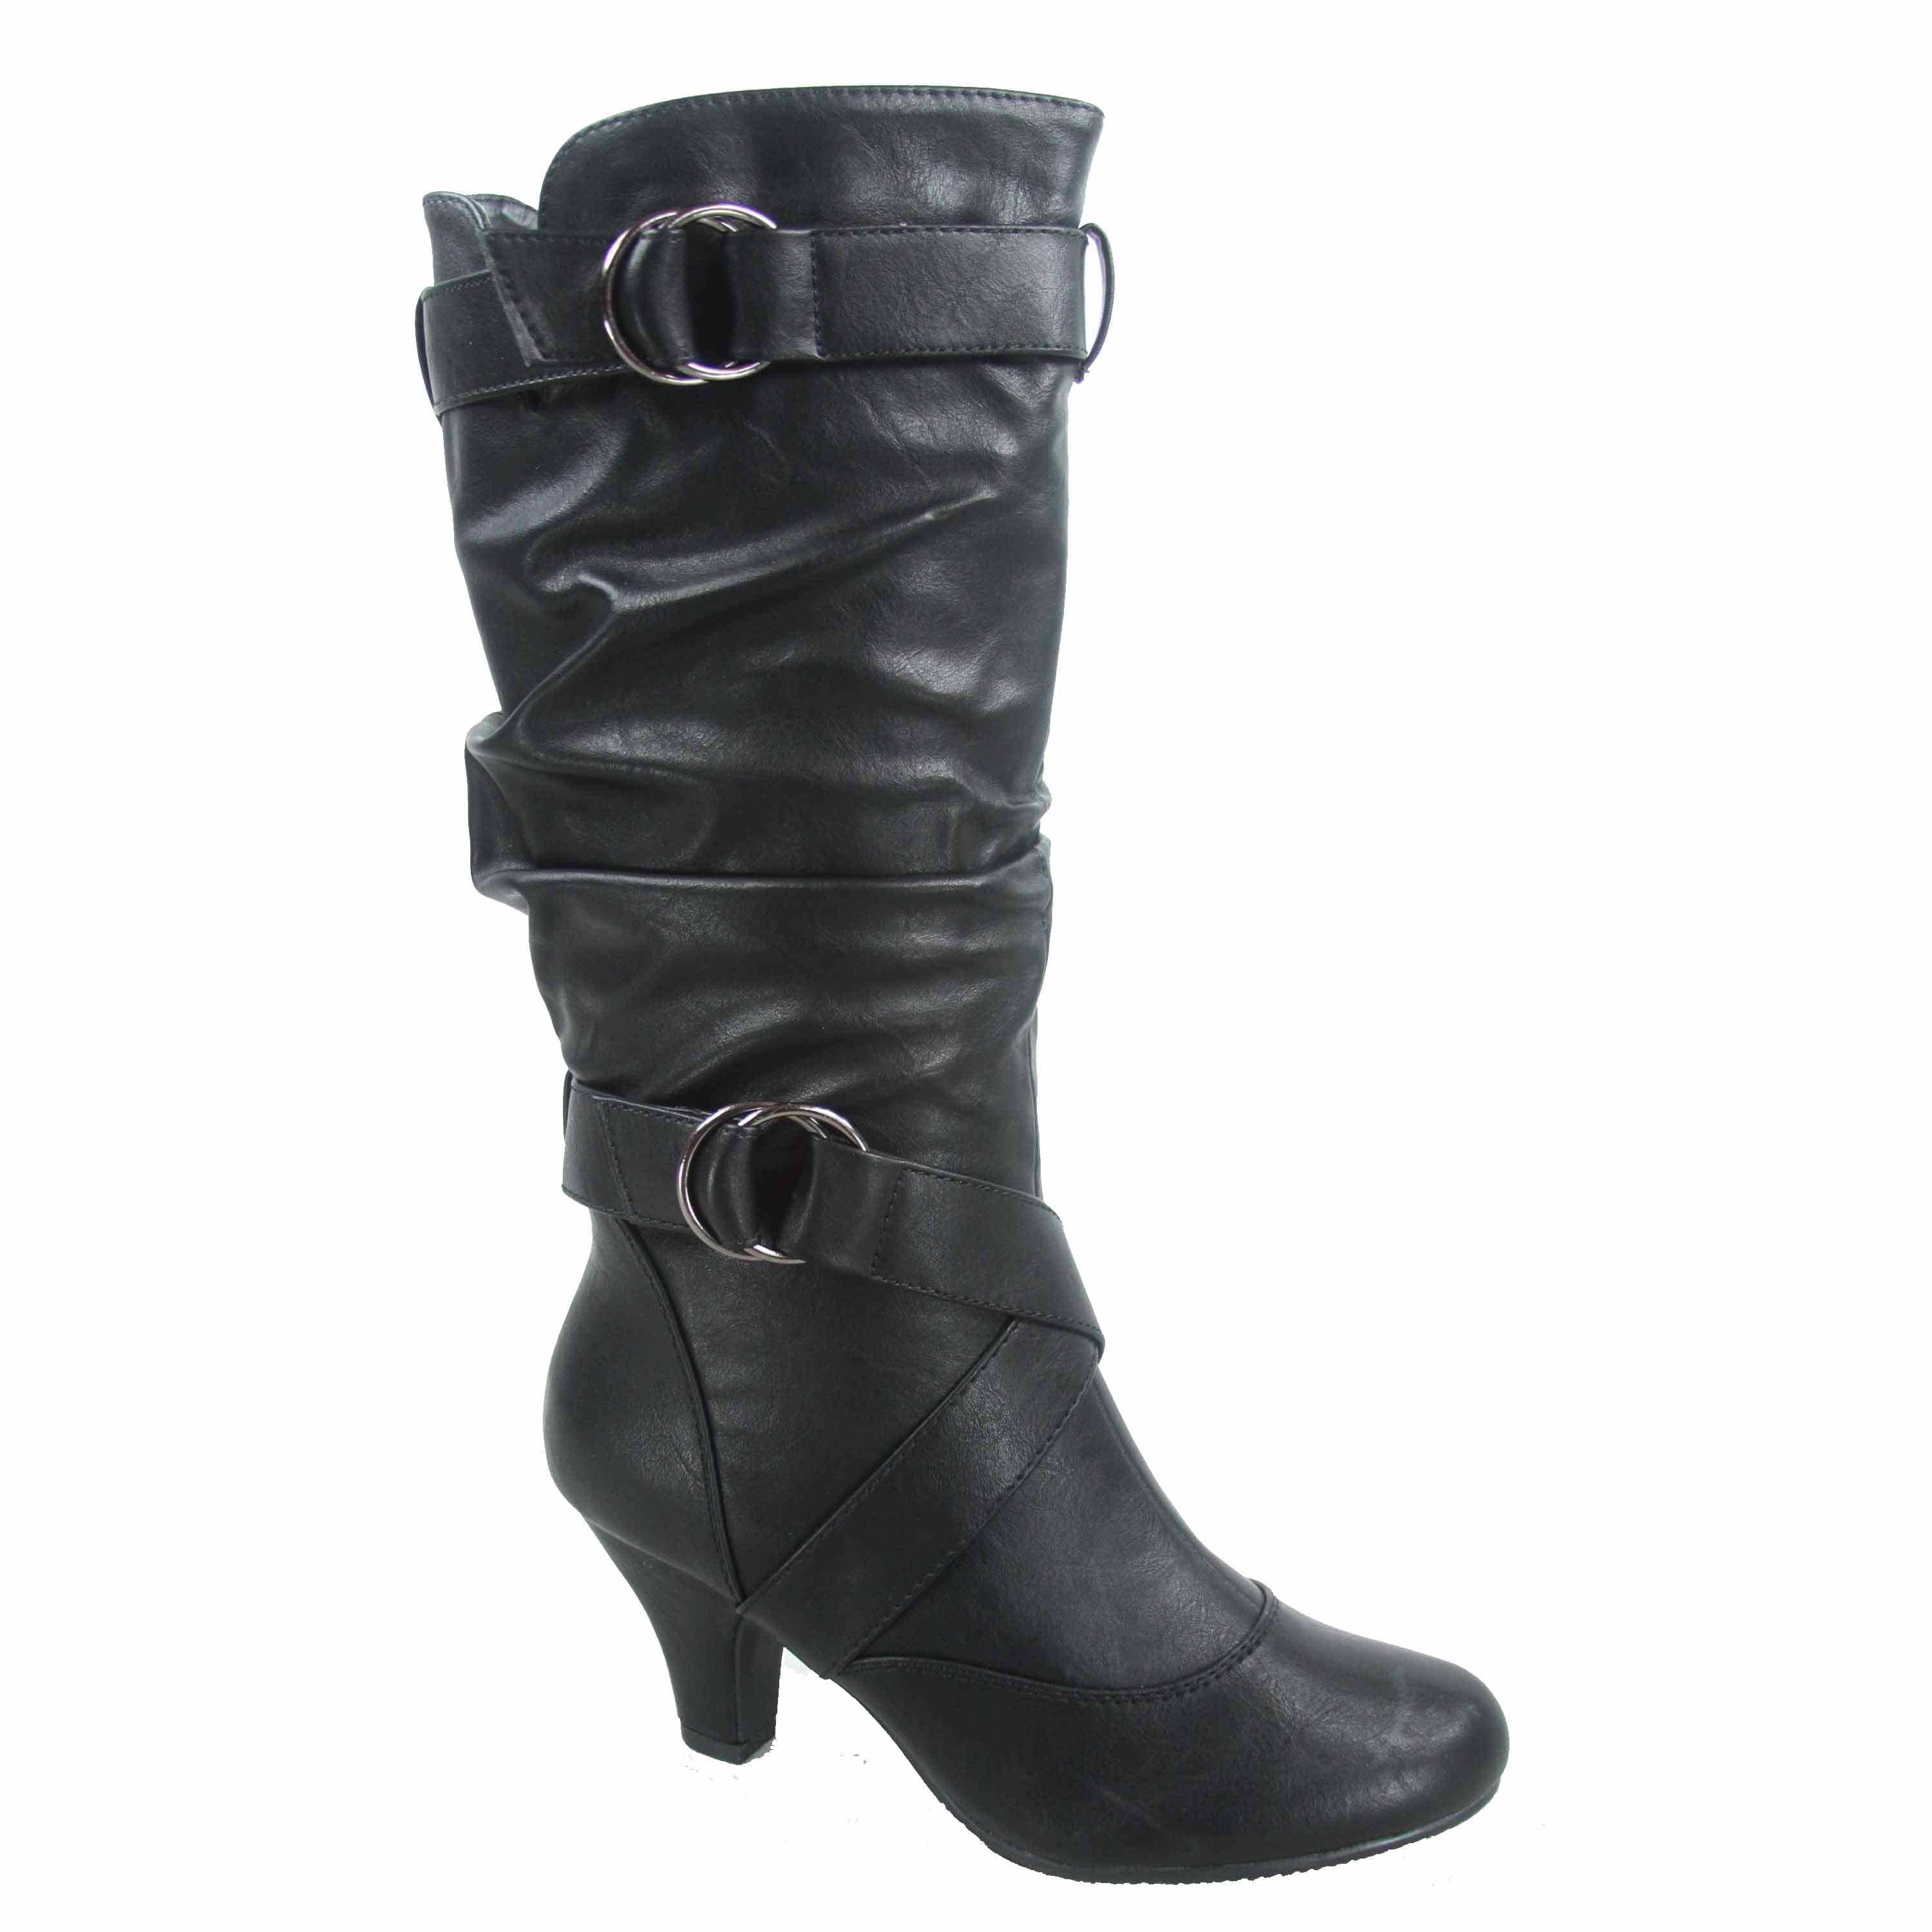 Chic stylish women's round toe buckle mid calf boots platform wedge heels shoe 